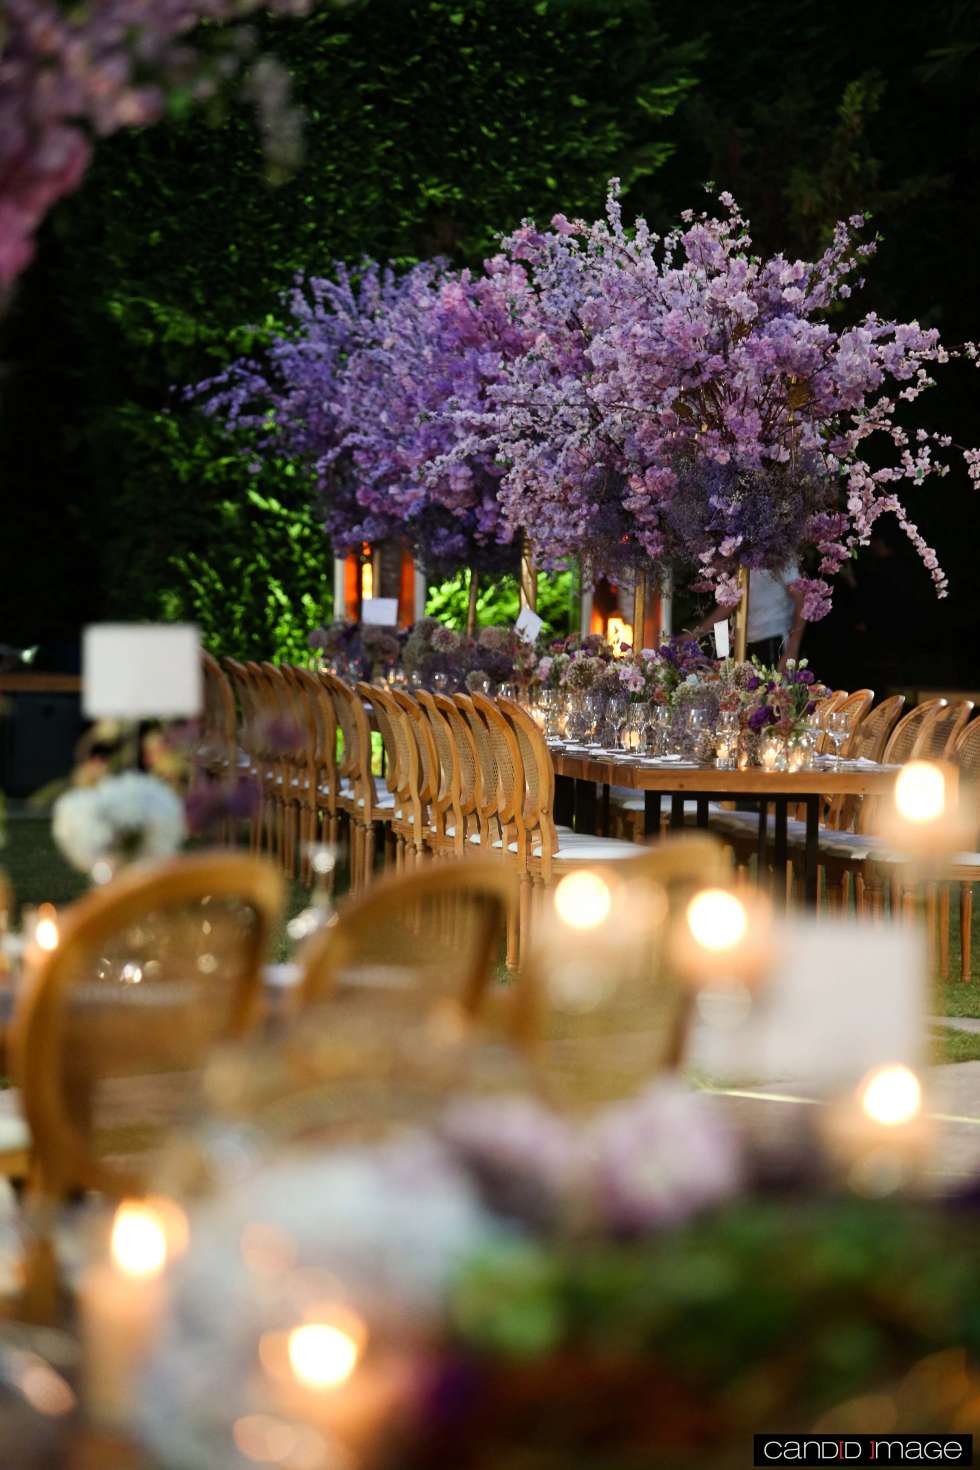 A Purple Garden Wedding in Lebanon